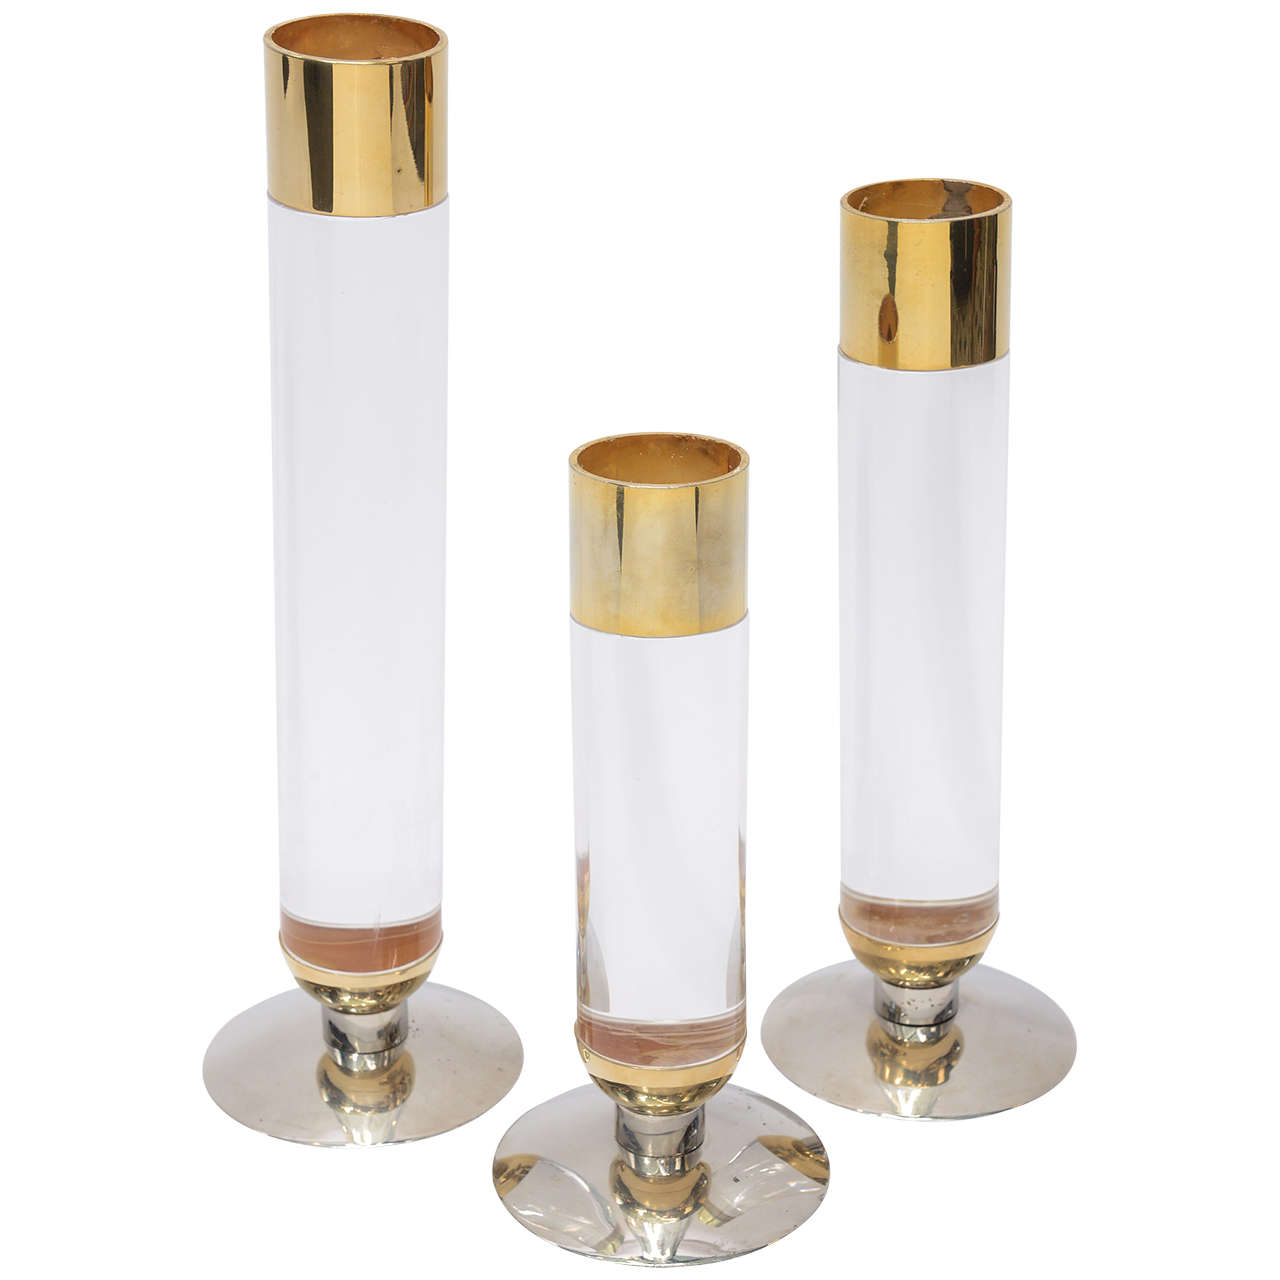 Stunning Set of Three Lucite, Brass and Chrome Candlesticks